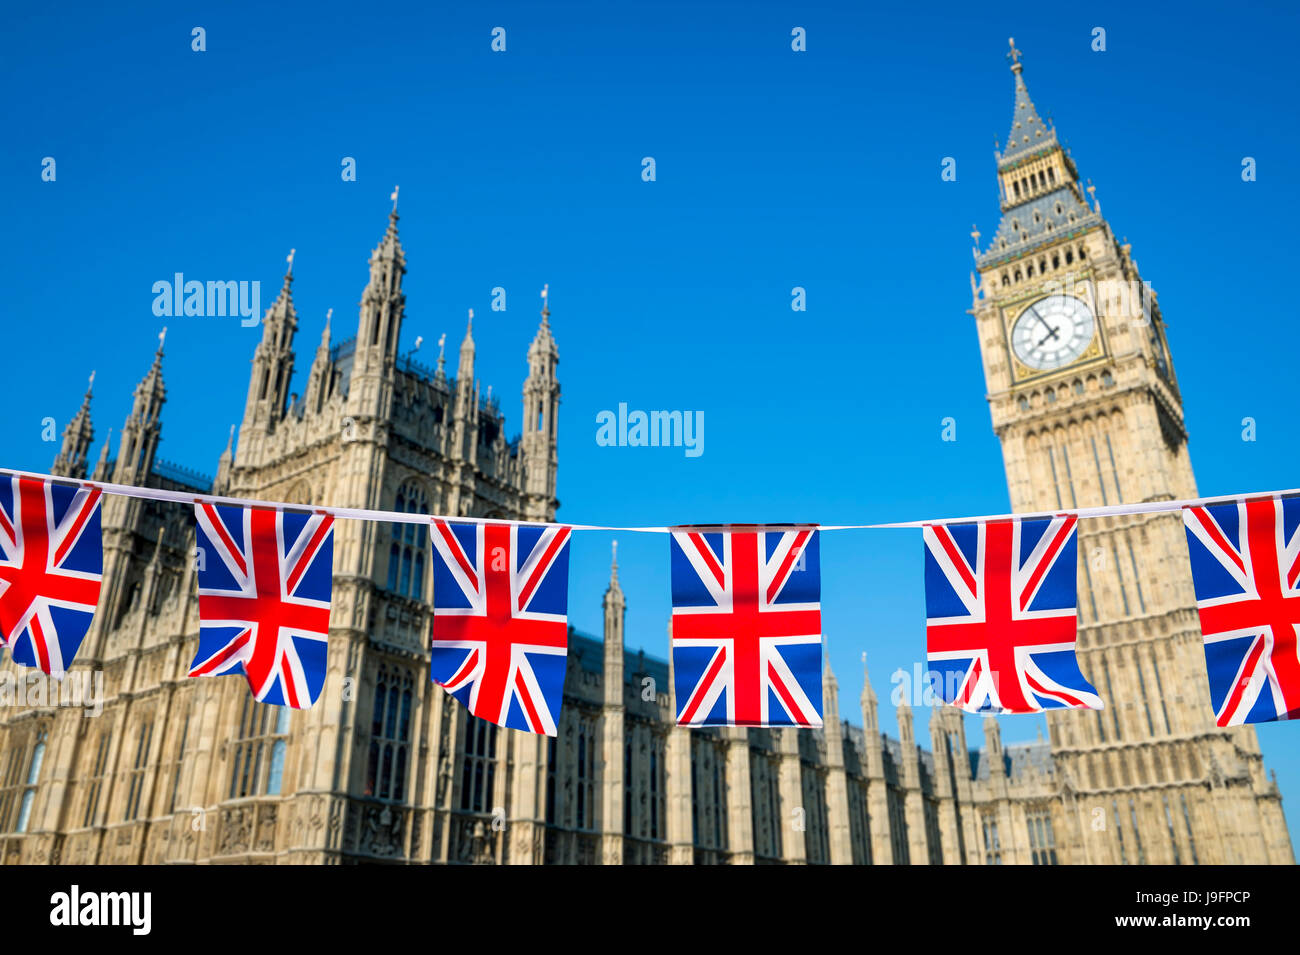 Union Jack Bunting fliegen vor den Houses of Parliament, Westminster Palace mit Big Ben unter strahlend blauem Himmel in London, England Stockfoto